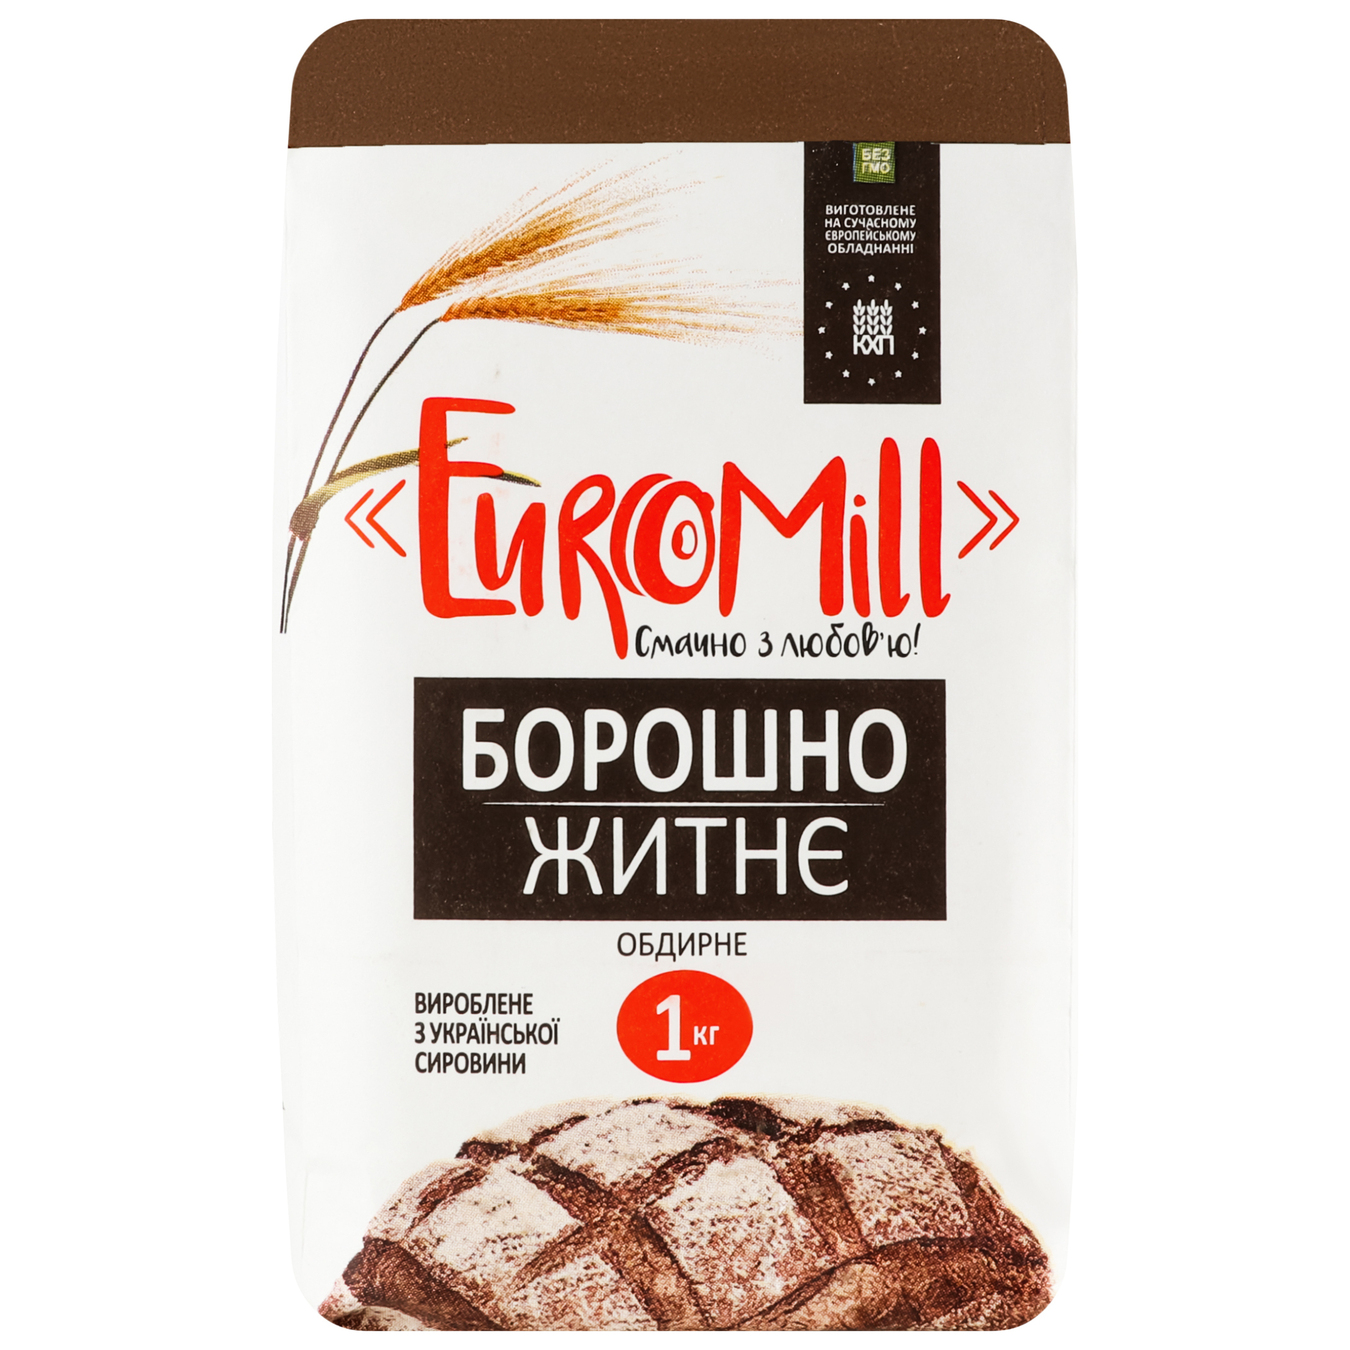 Борошно житнє EuroMill обдирне 1 кг 5